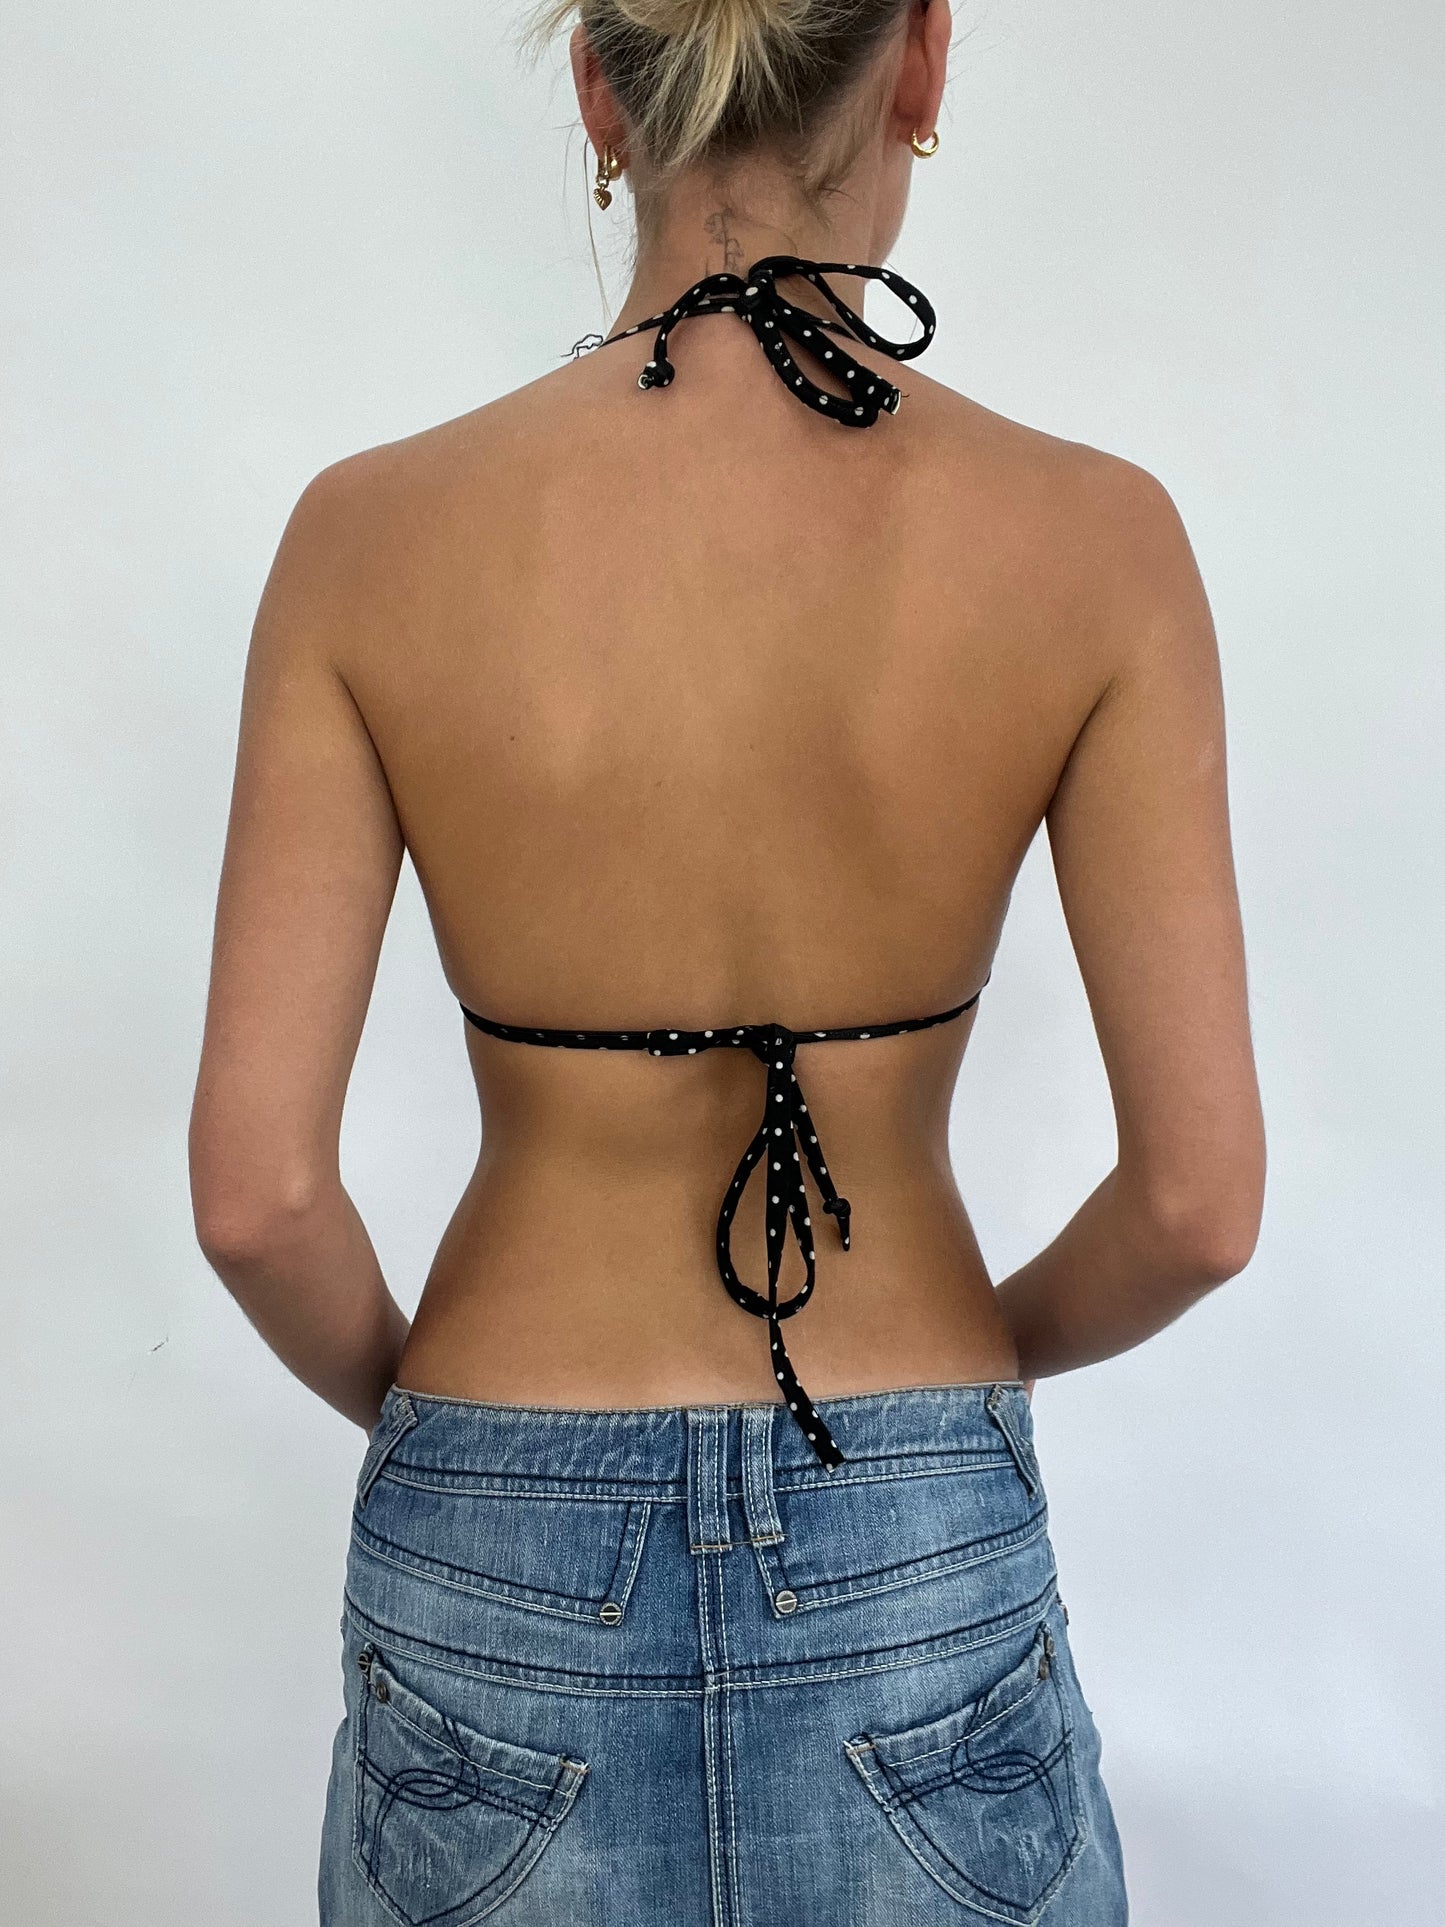 COACHELLA DROP | small black bikini top with strawberry pattern and polka dot straps